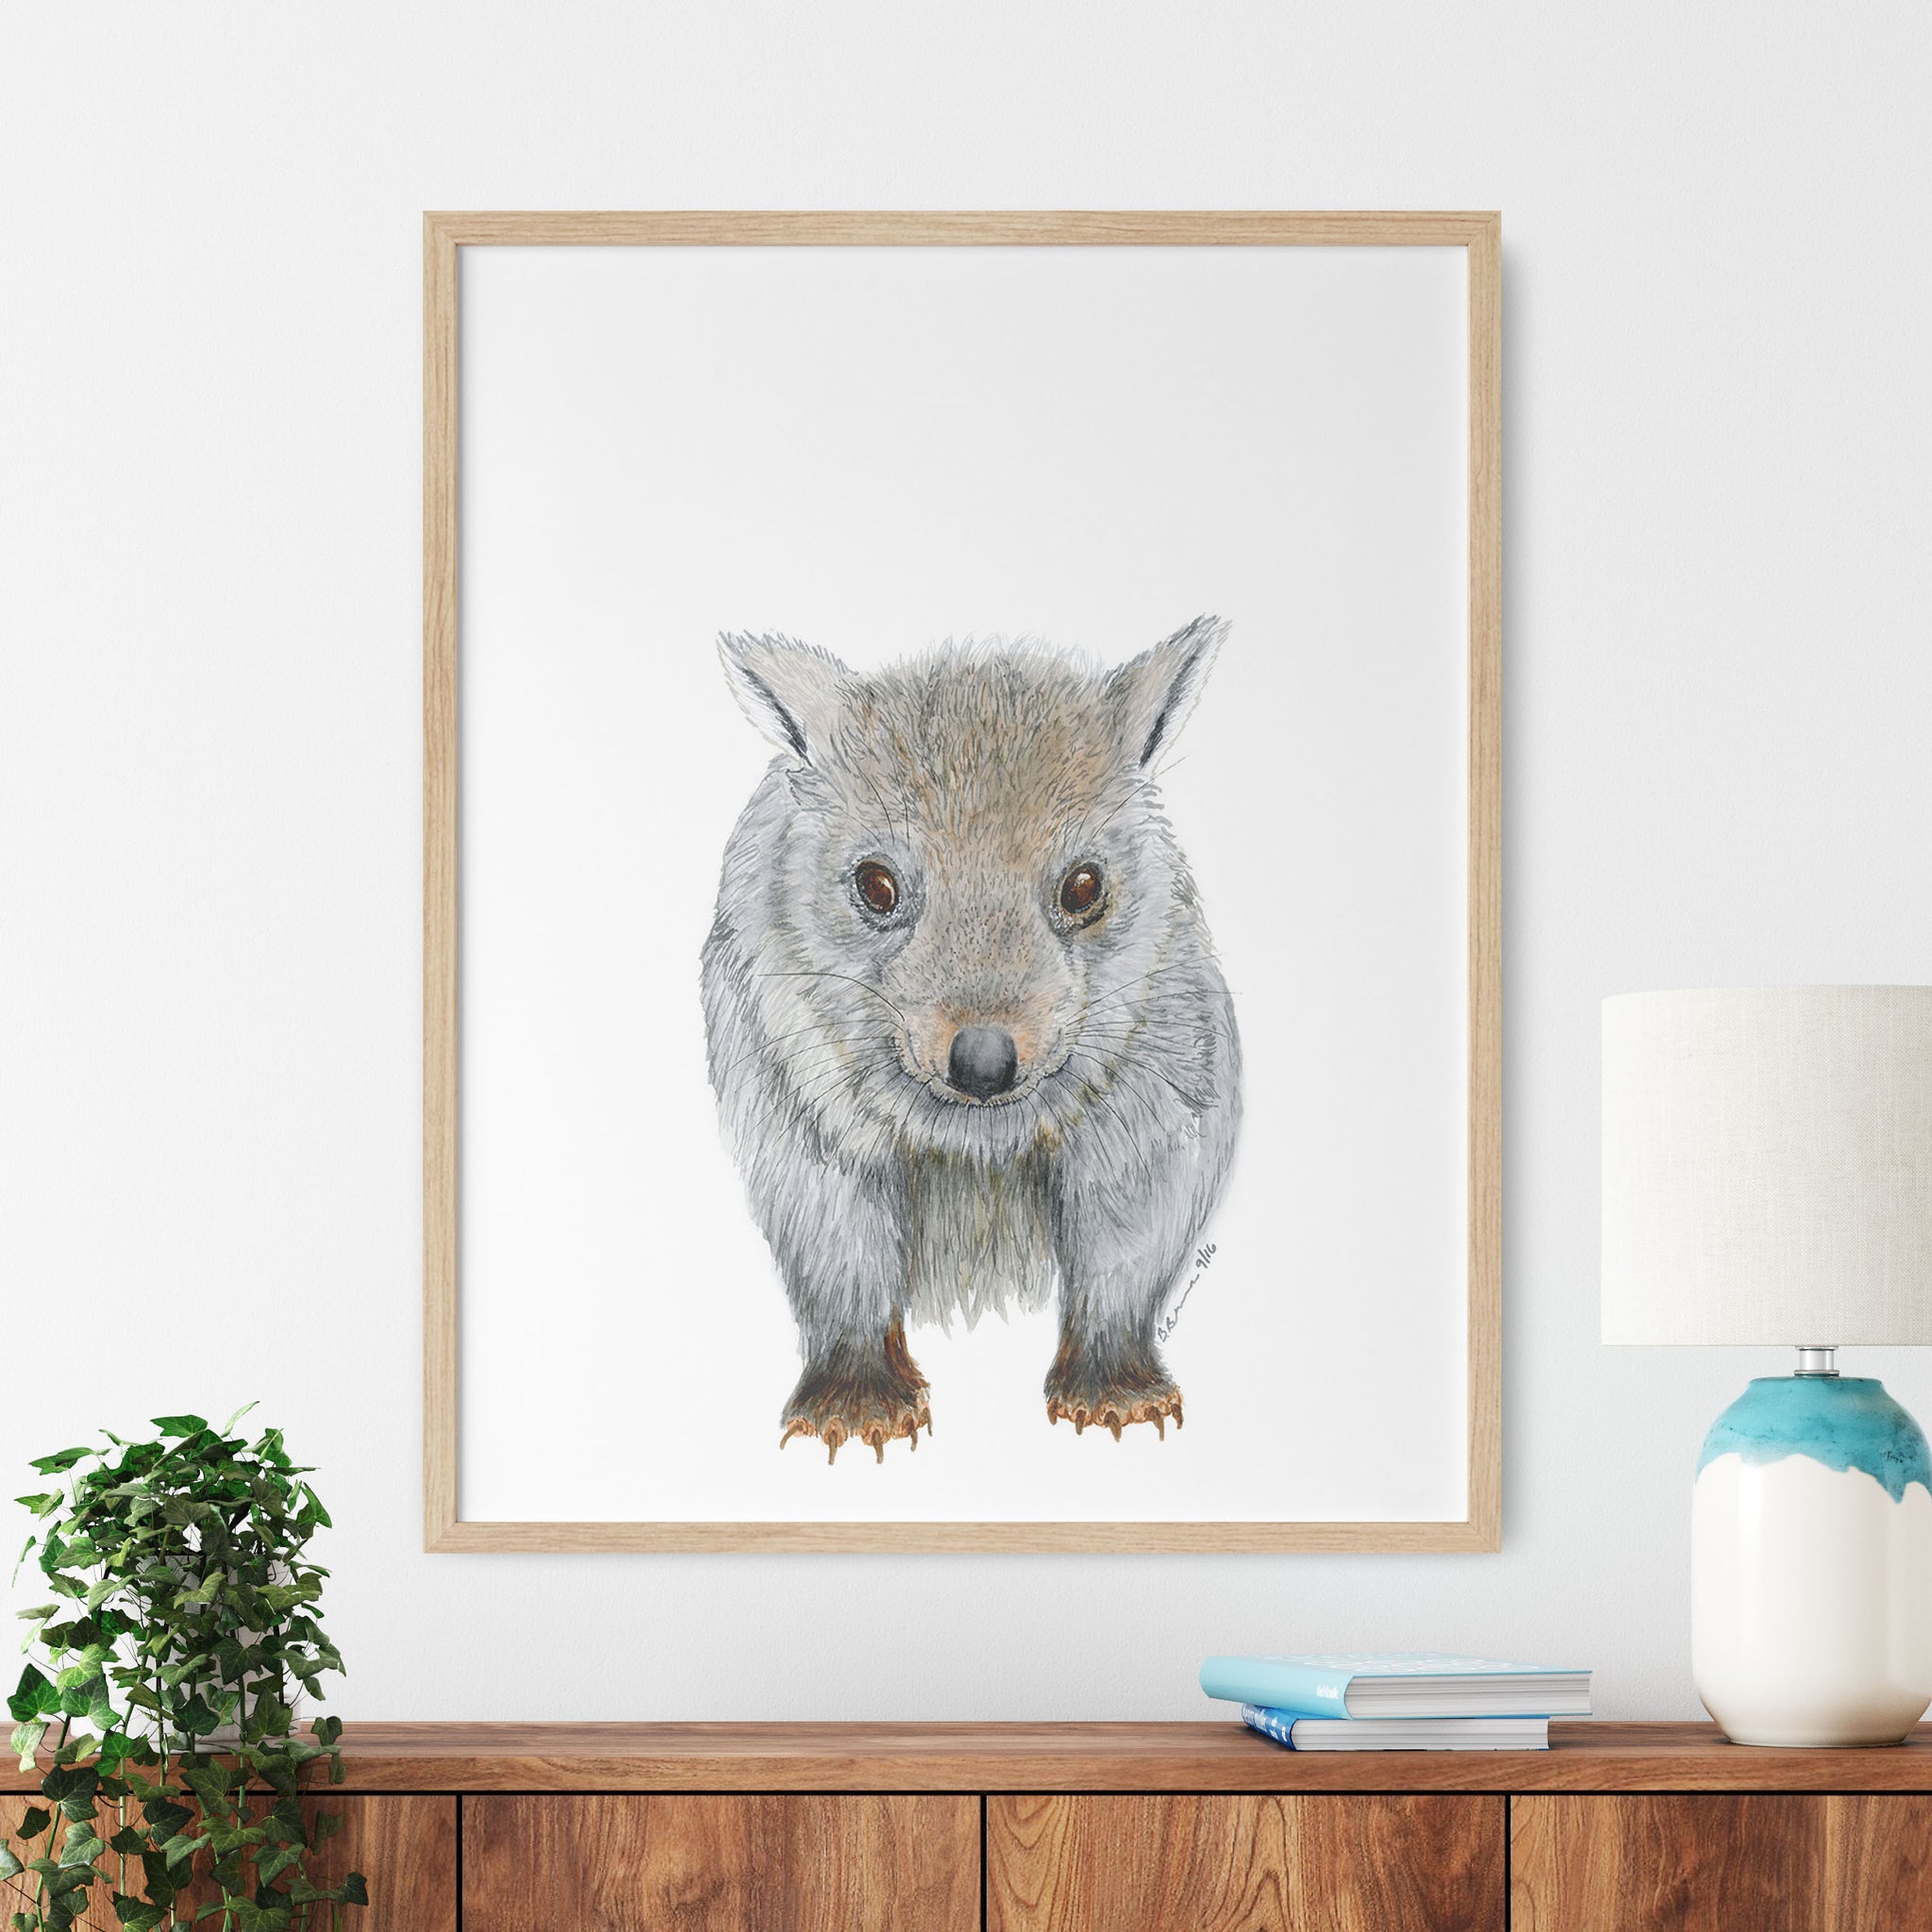 Poster Maker - Wombat Apps